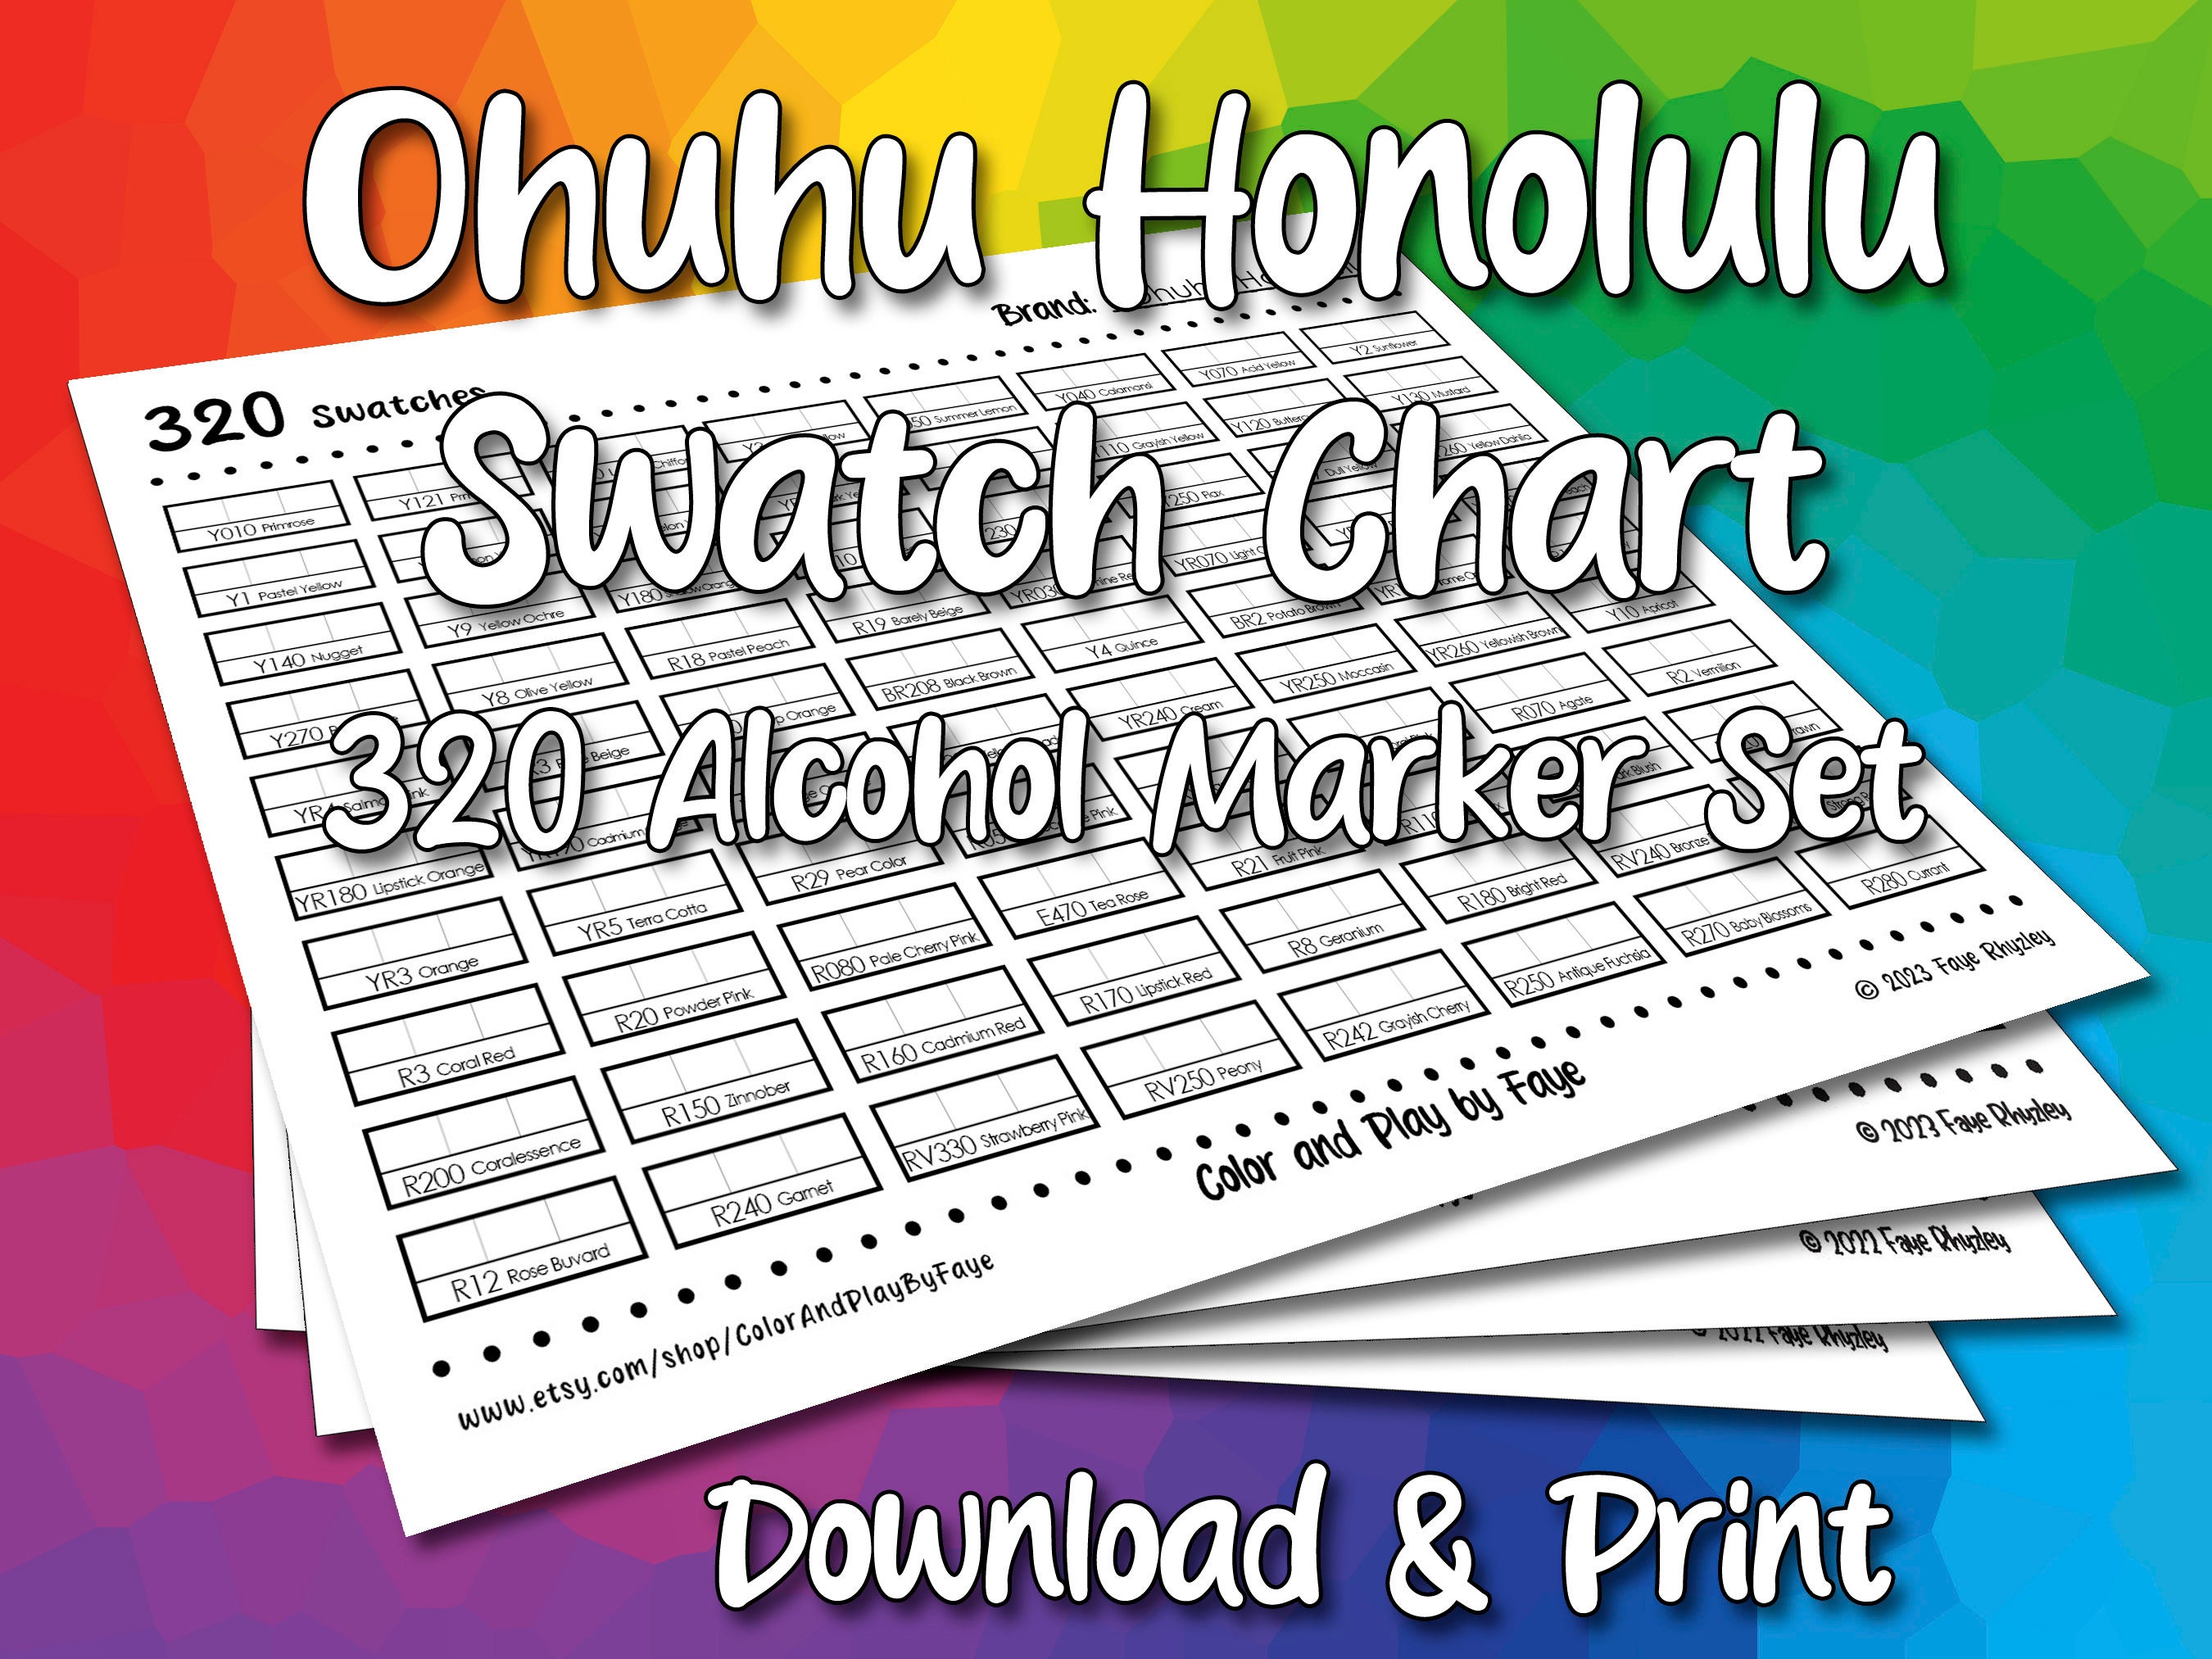 Ohuhu Honolulu Markers 120 Set - Better Swatch Order 